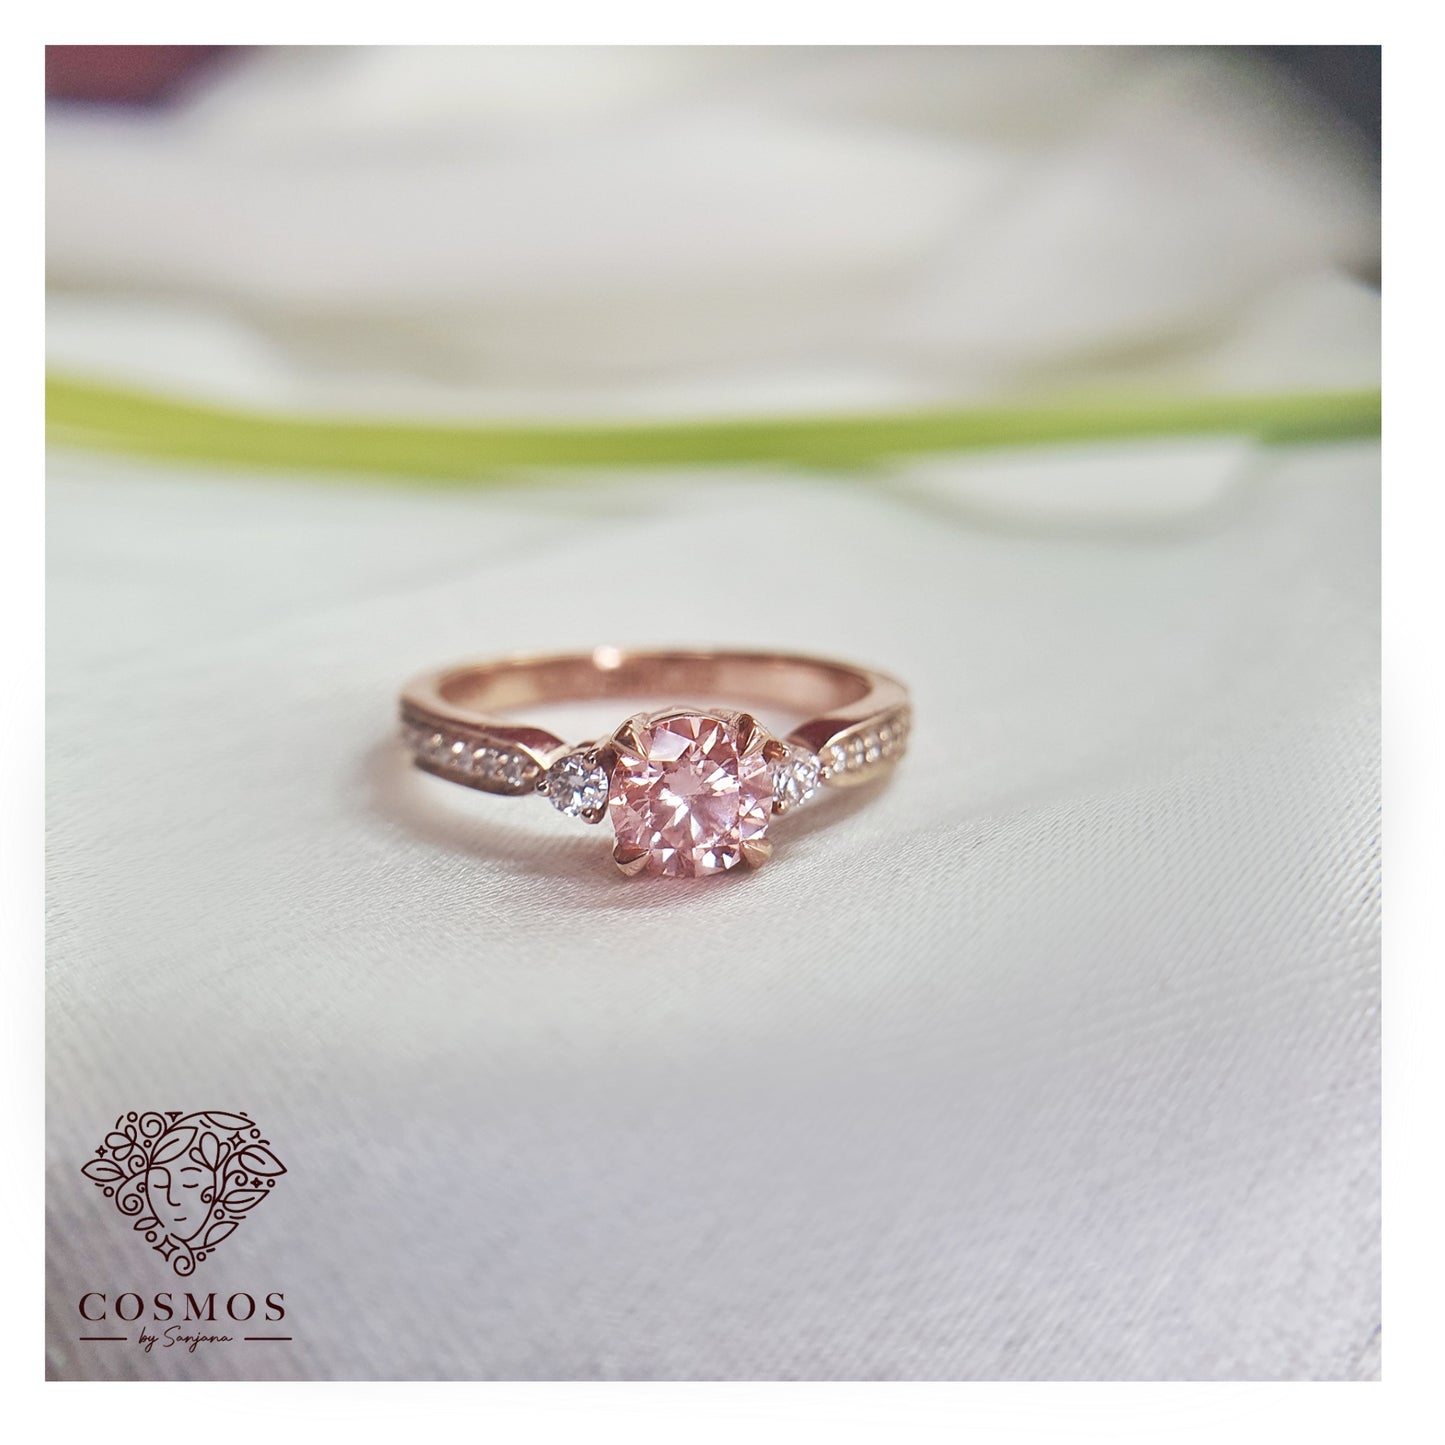 Pink petita - The light pink diamond ring